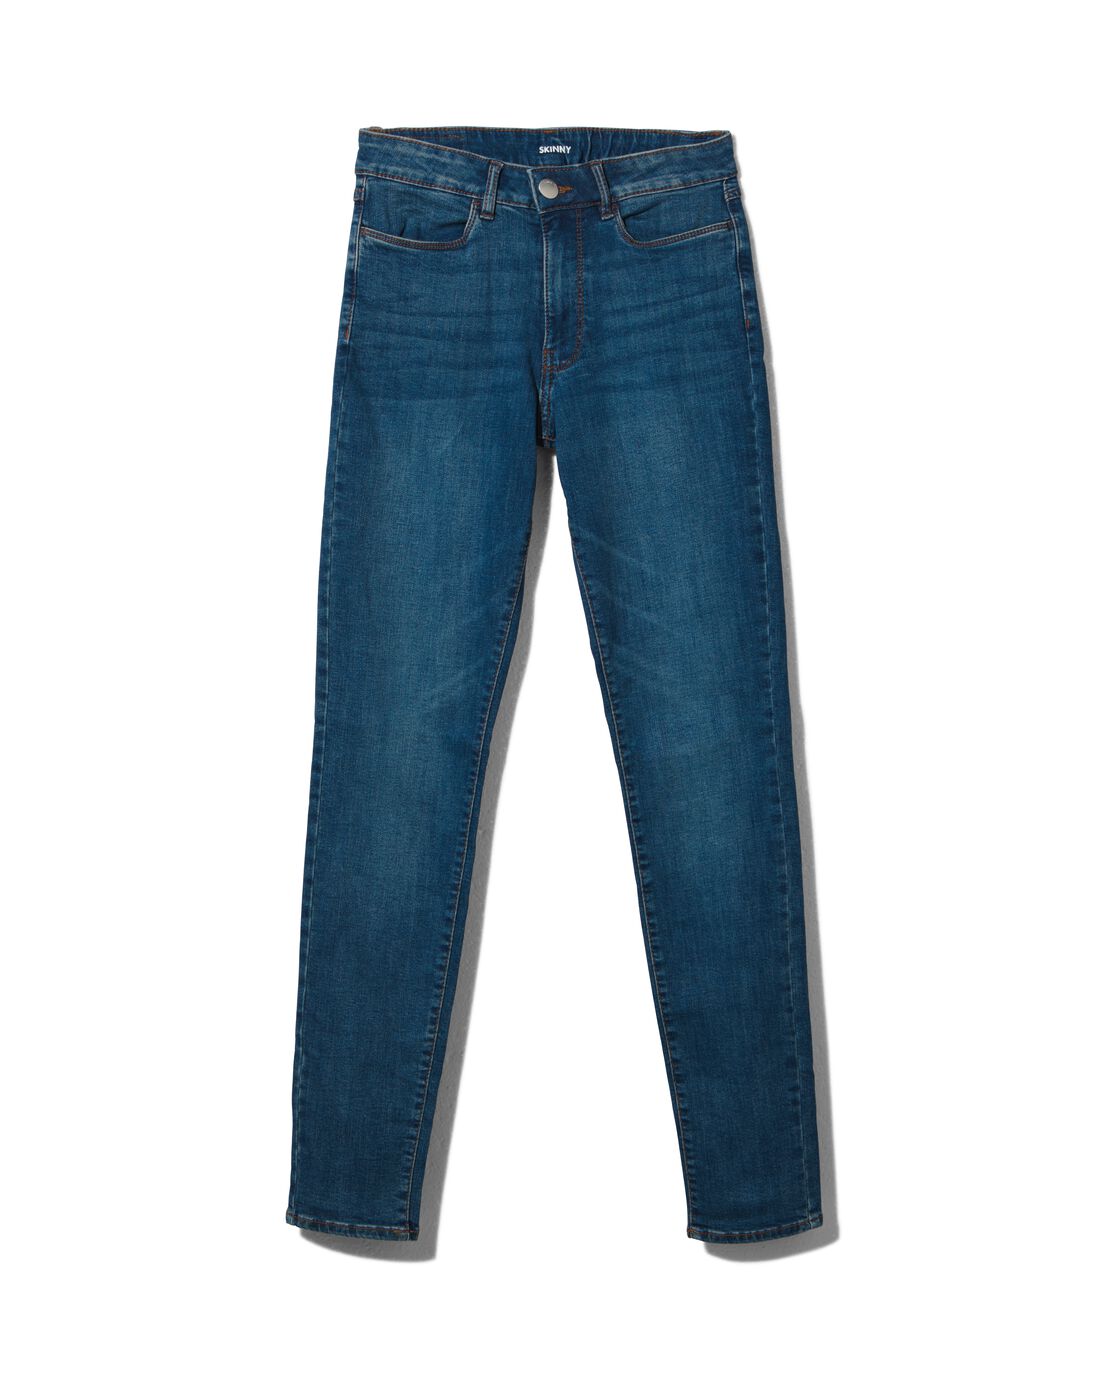 HEMA Dames Jeans Skinny Fit Middenblauw (middenblauw)